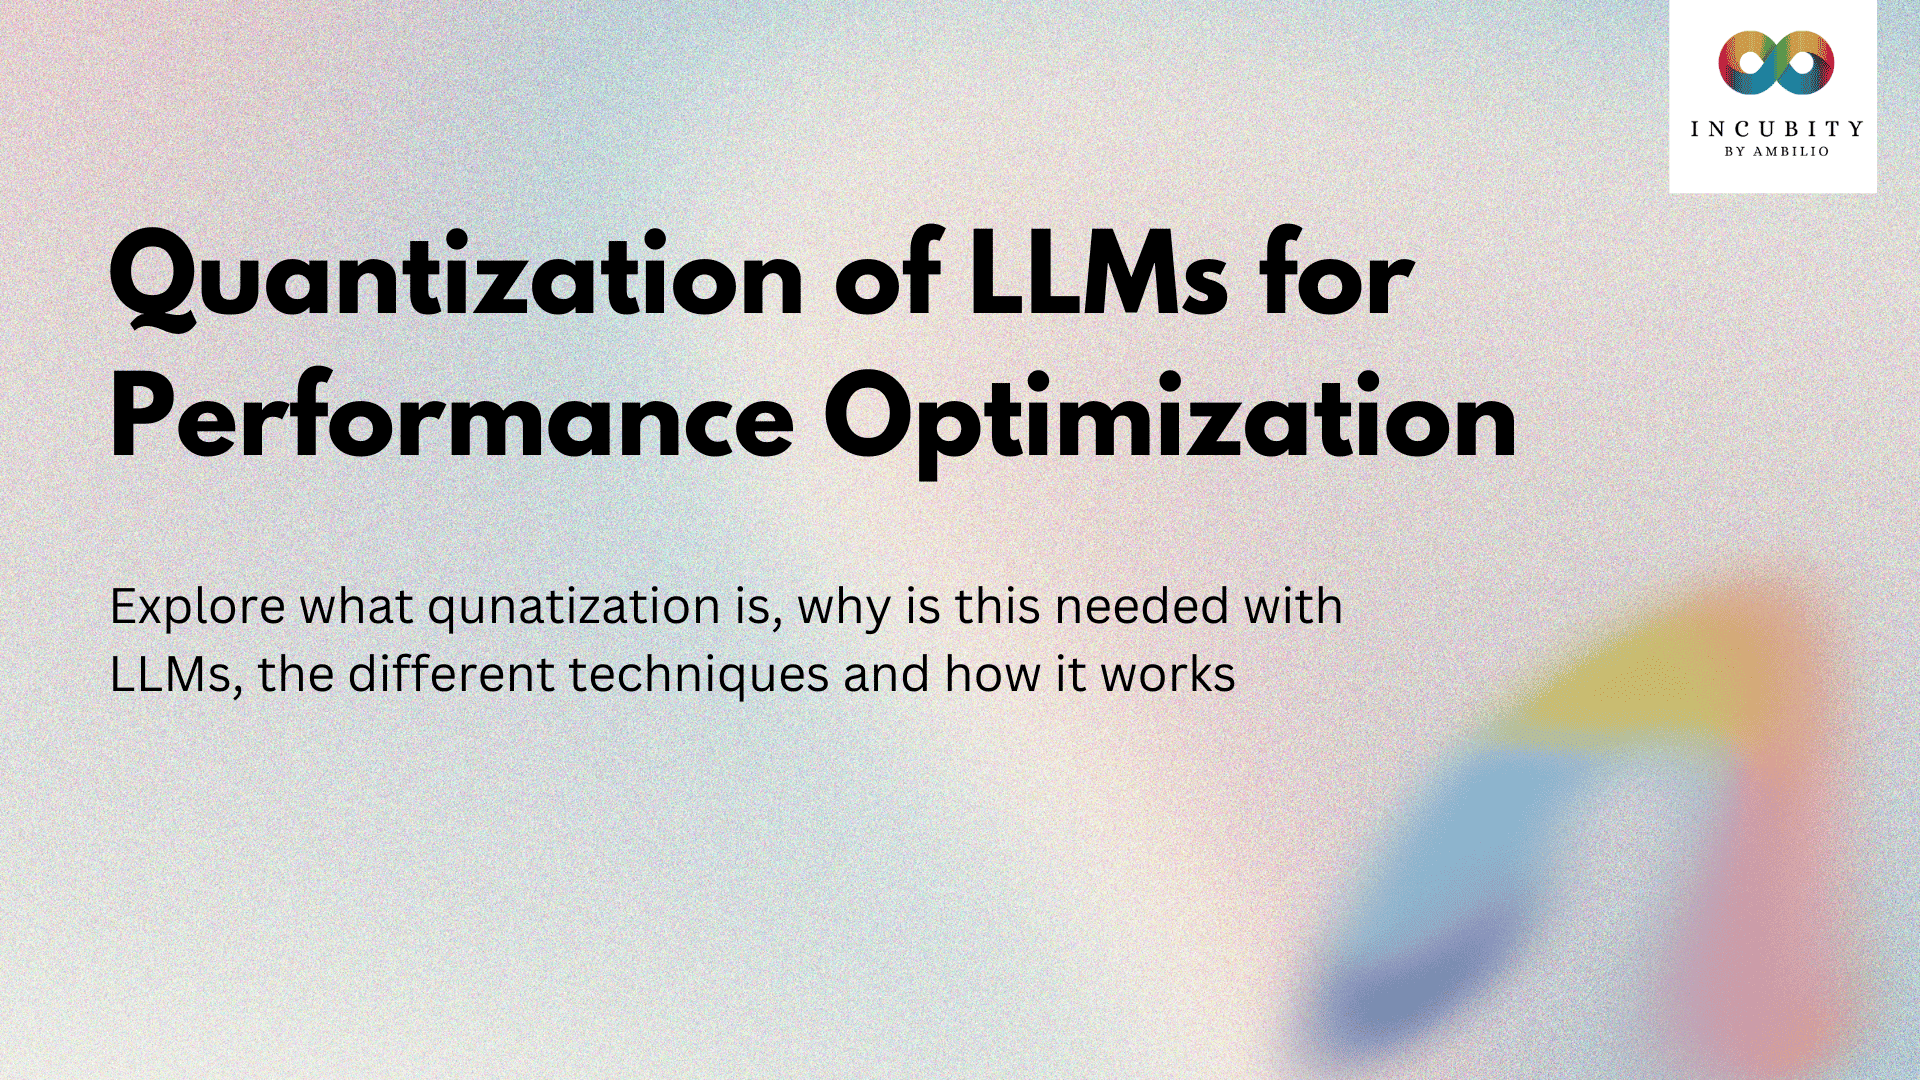 LLM quanization for optimized performance